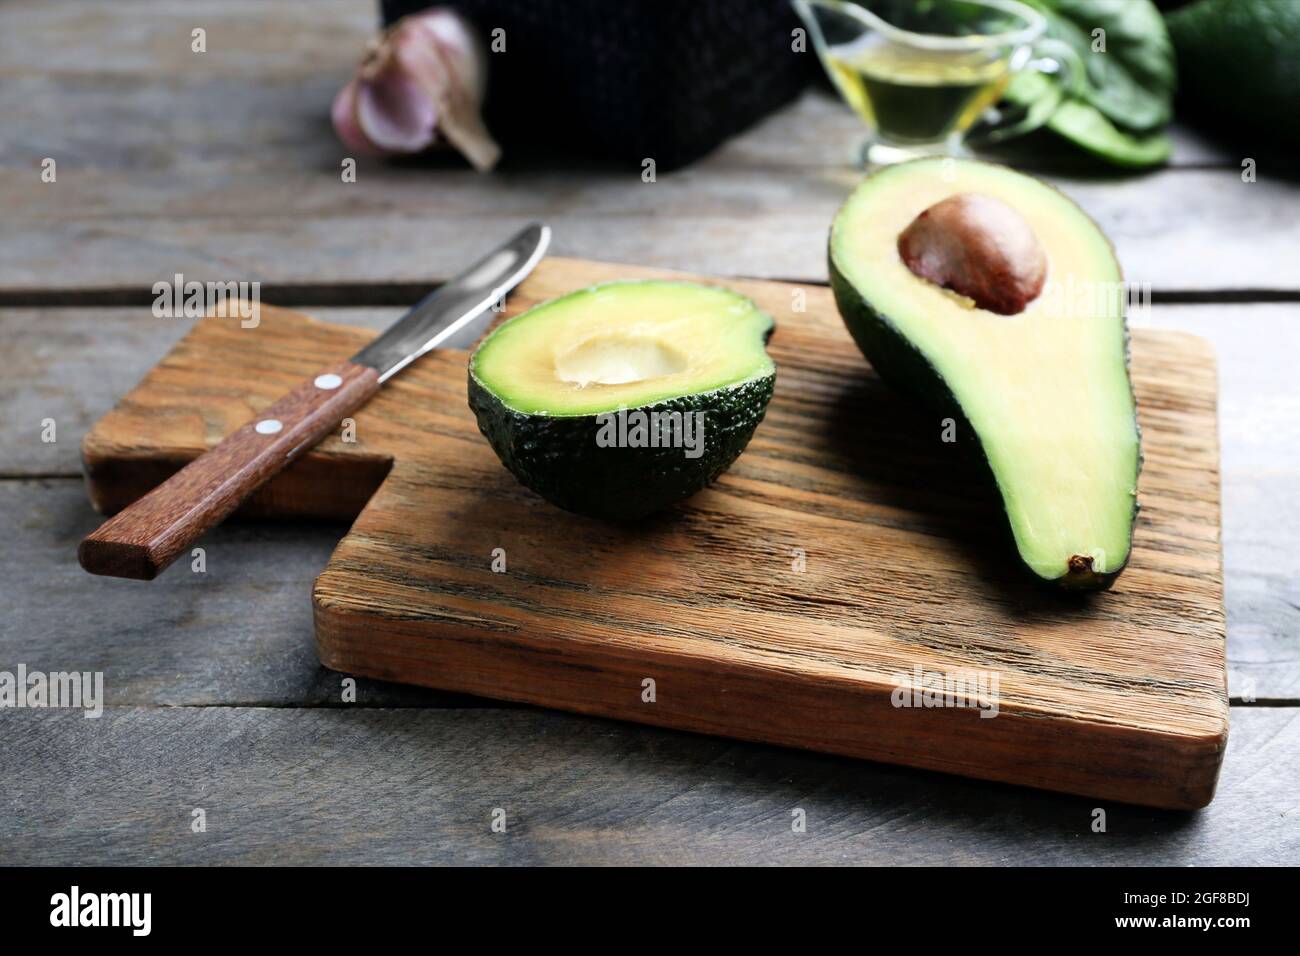 https://c8.alamy.com/comp/2GF8BDJ/sliced-avocado-with-knife-on-wooden-cutting-board-2GF8BDJ.jpg